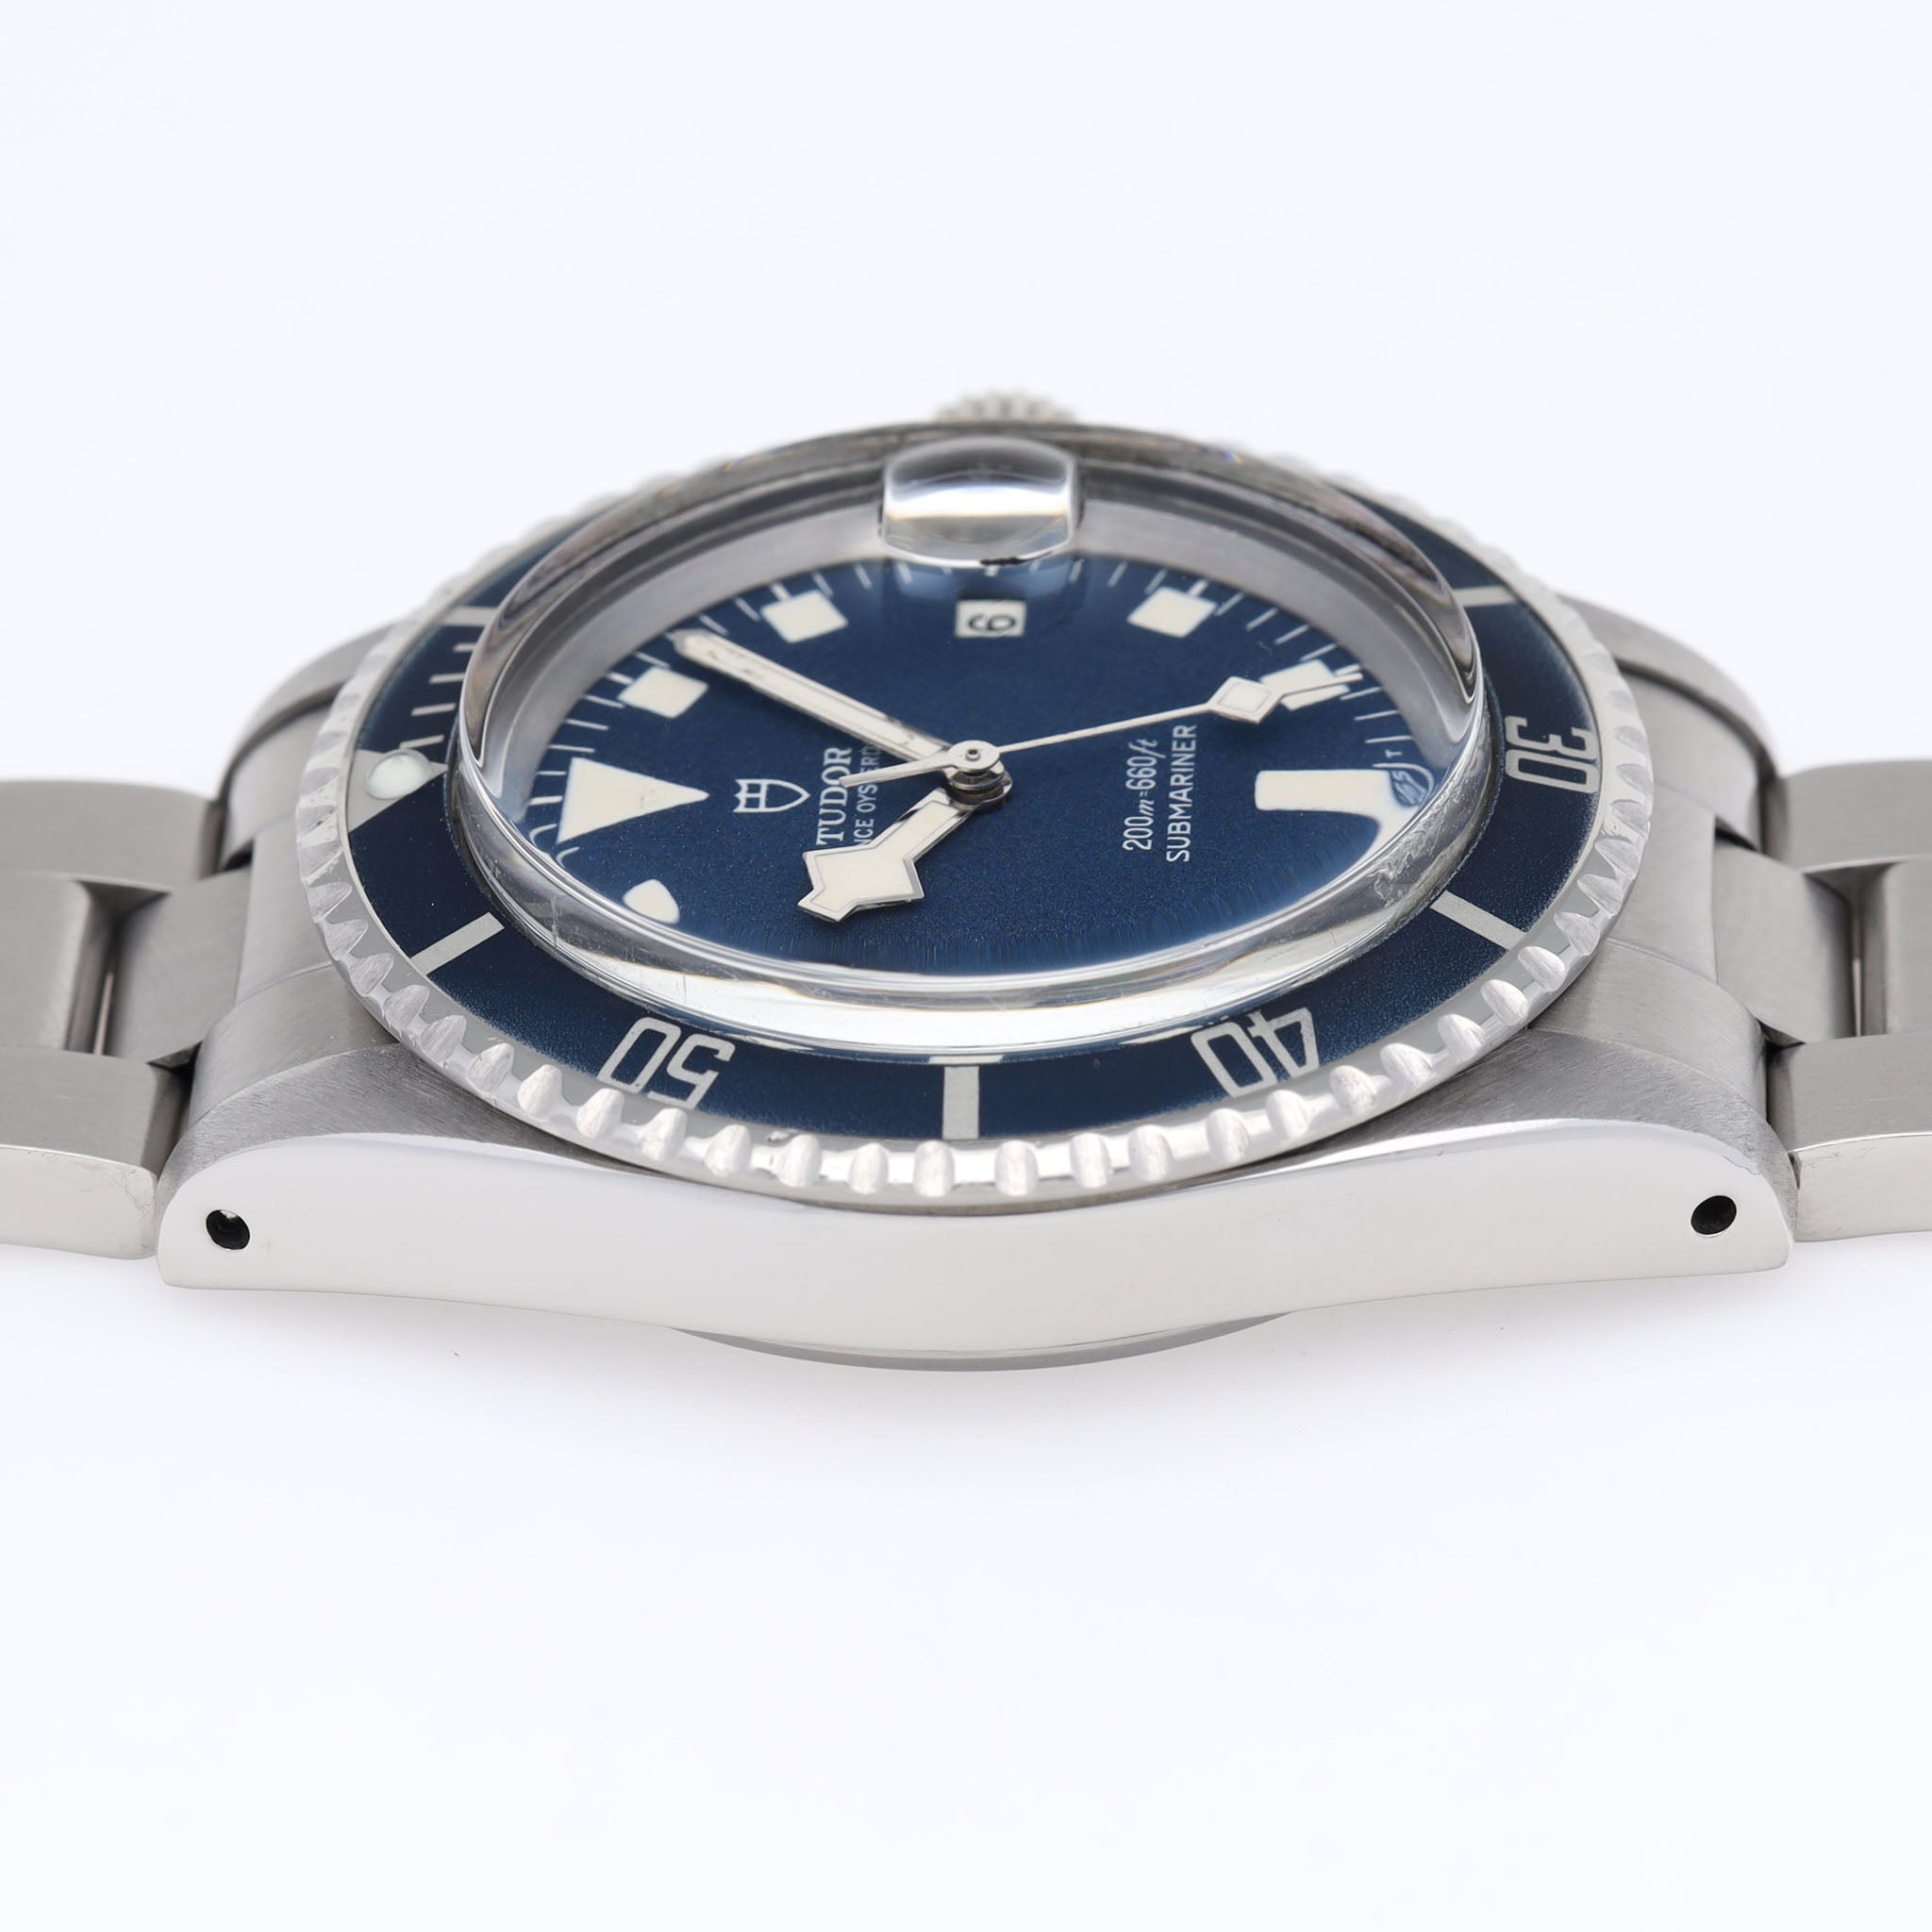 Tudor Submariner Date “Snowflake” Blue dial ref 9411